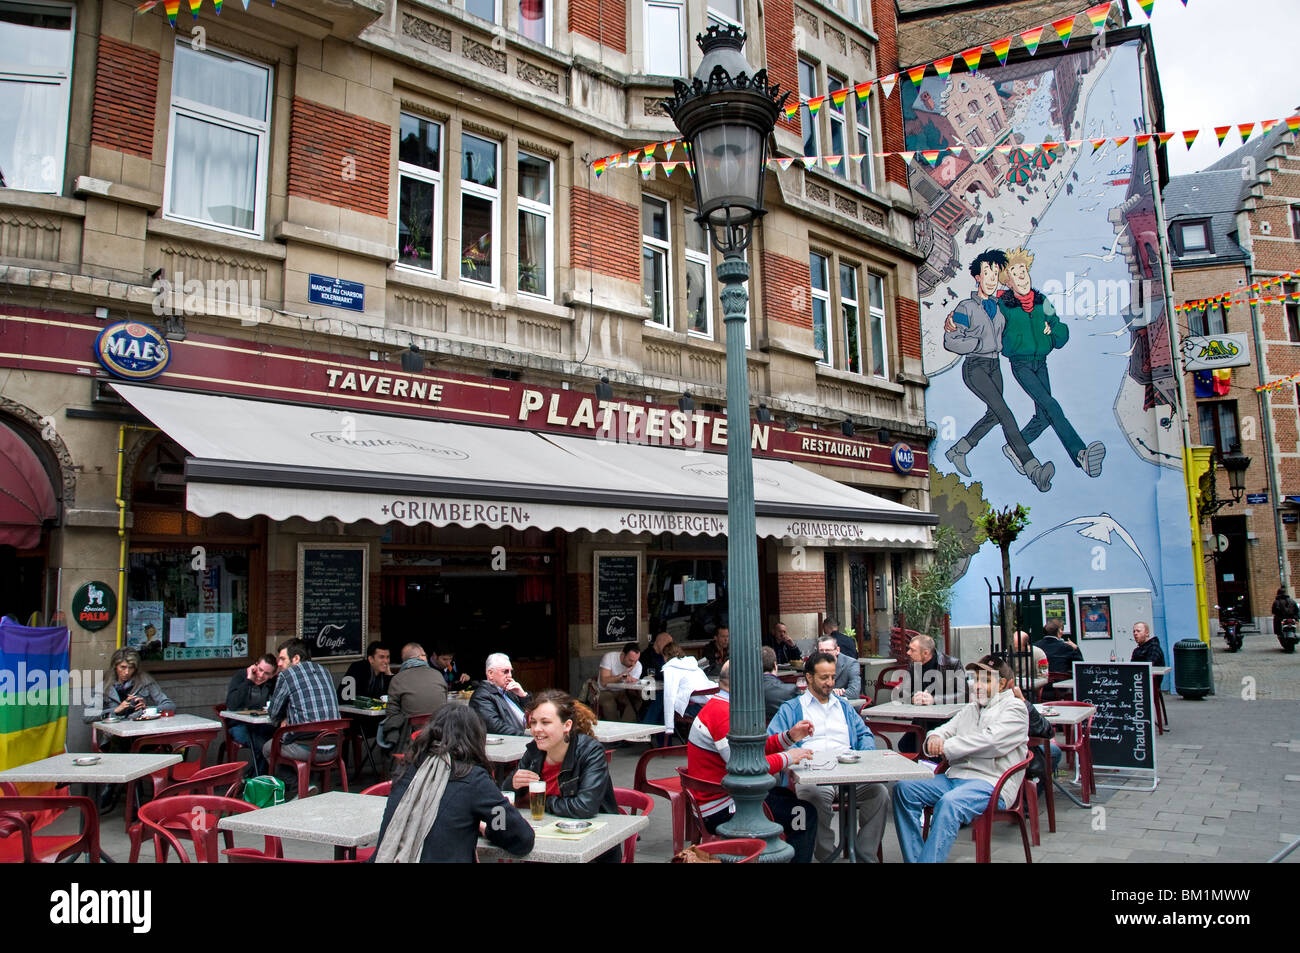 Cafe Plattestein wall painting Marche Au Charbon - Kolenmarkt Brussels Belgium Stock Photo